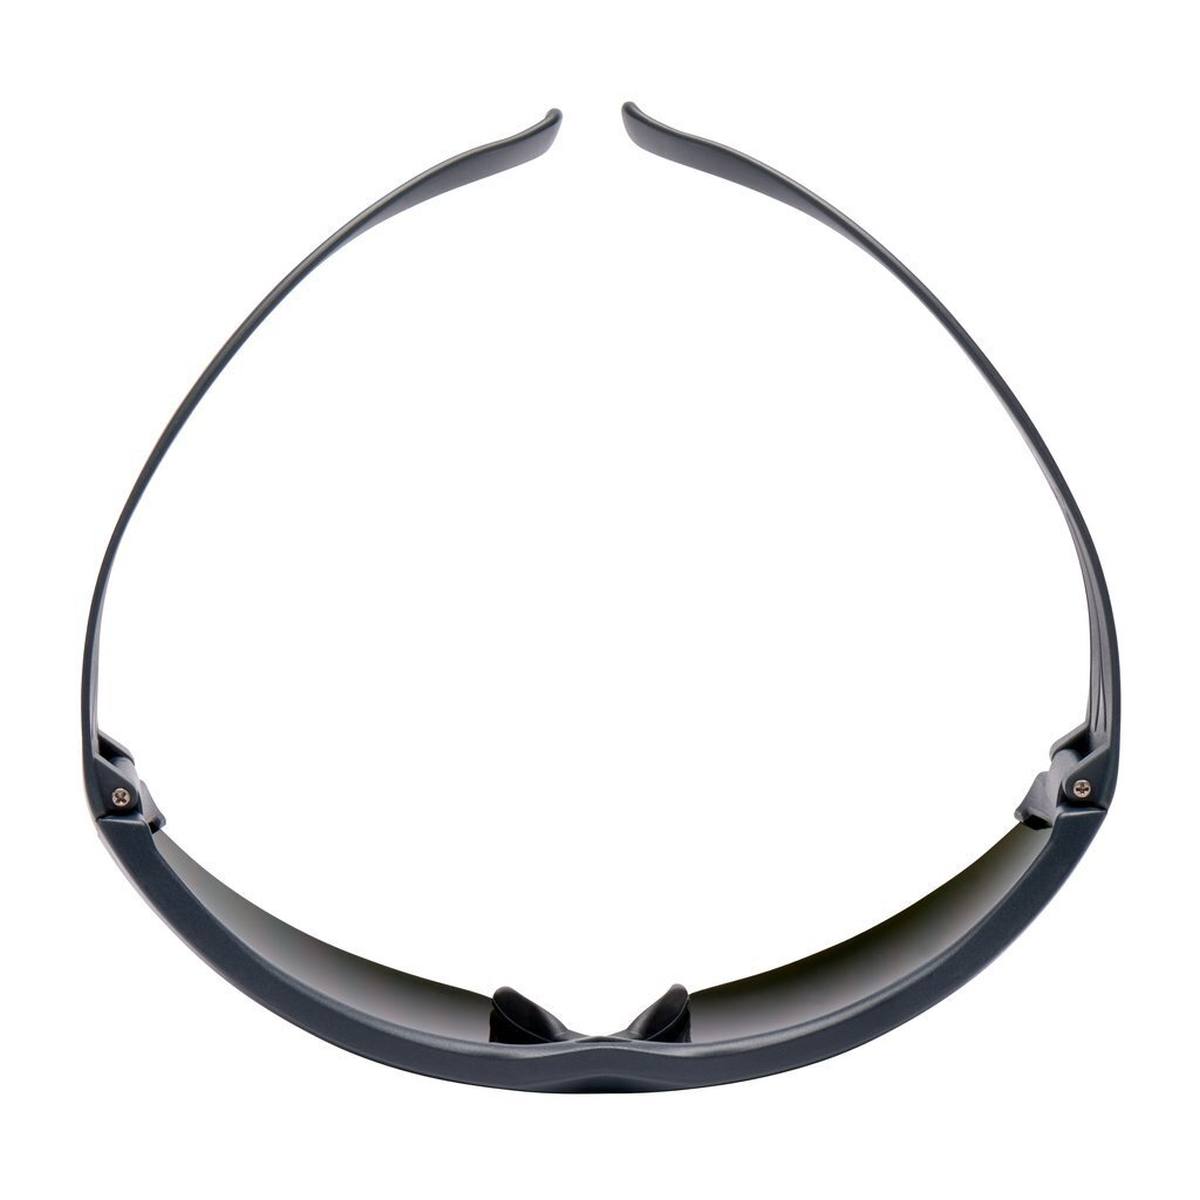 3M SecureFit 600 veiligheidsbril, grijze veren, antikrascoating, lasglas beschermingsniveau 5.0, SF650AS-E